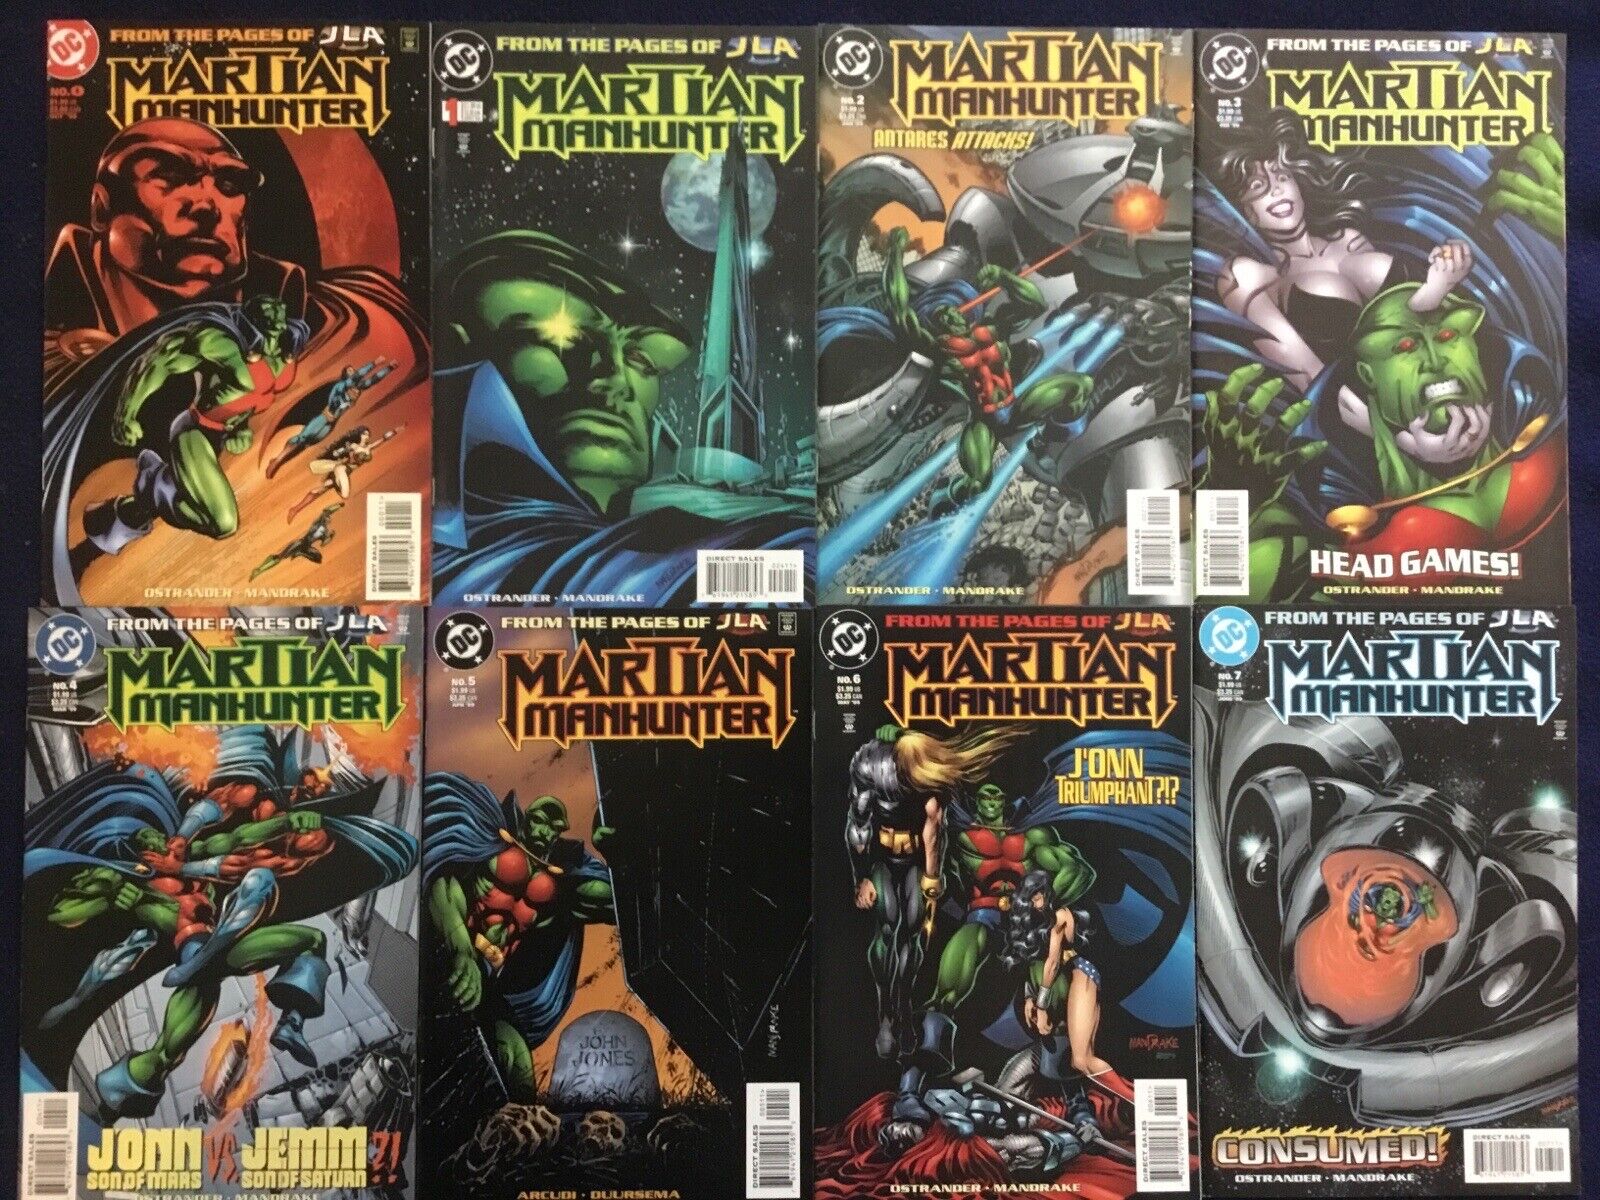 Martian Manhunter 0-36 Annual 1-2 & Issue 1 Million DC Comics Justice League